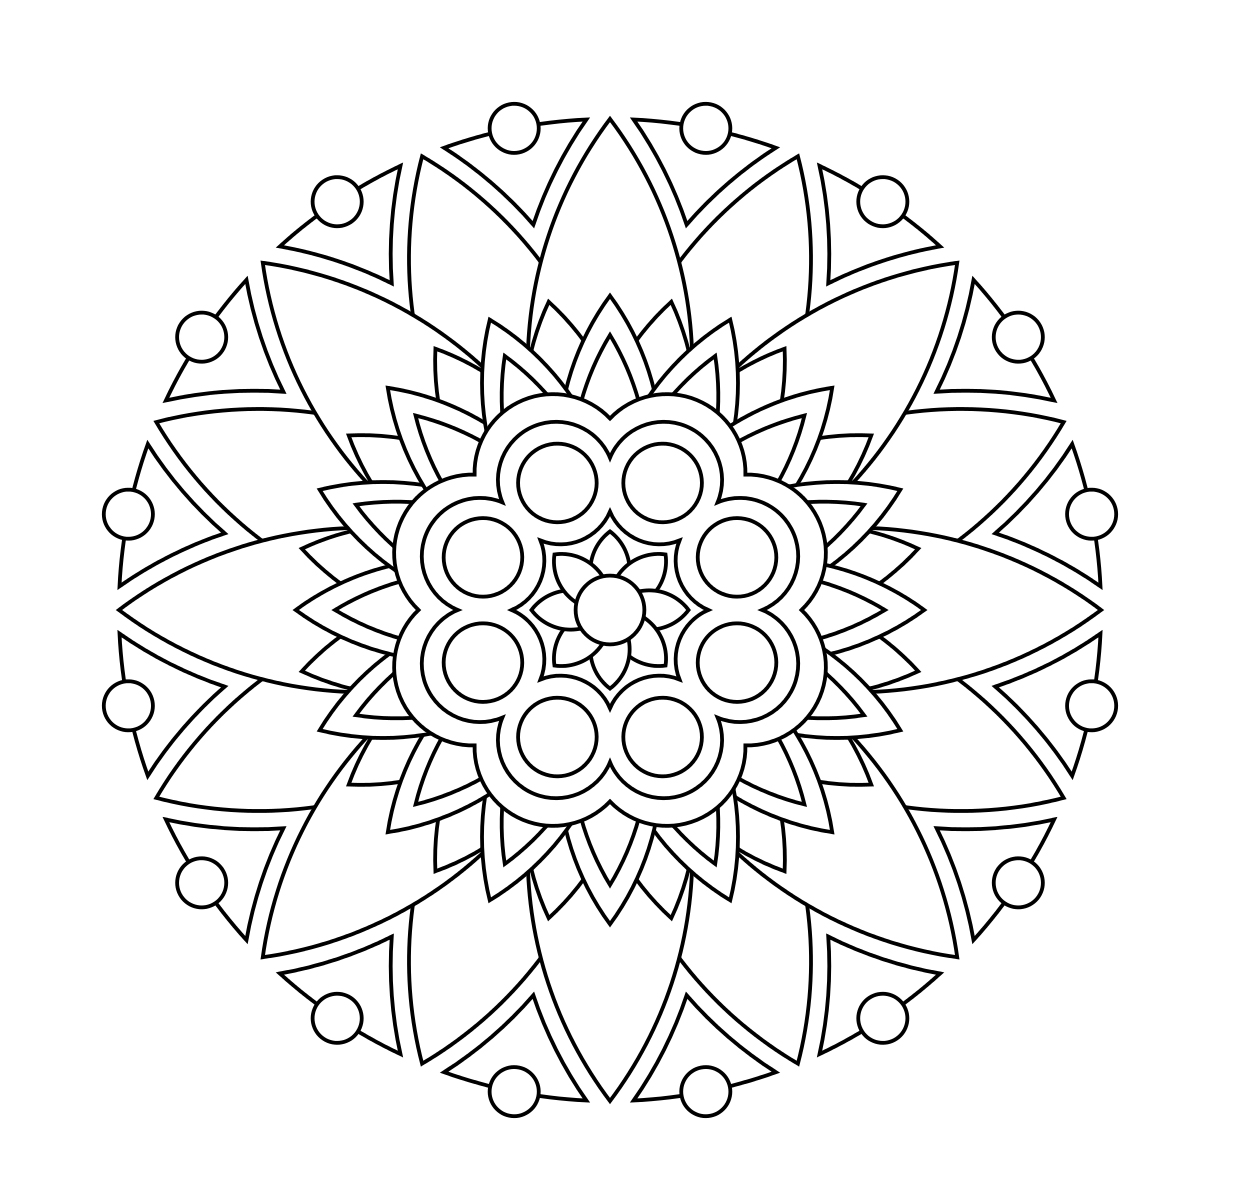 Simple Mandala Coloring Pages at GetColorings.com   Free printable ...